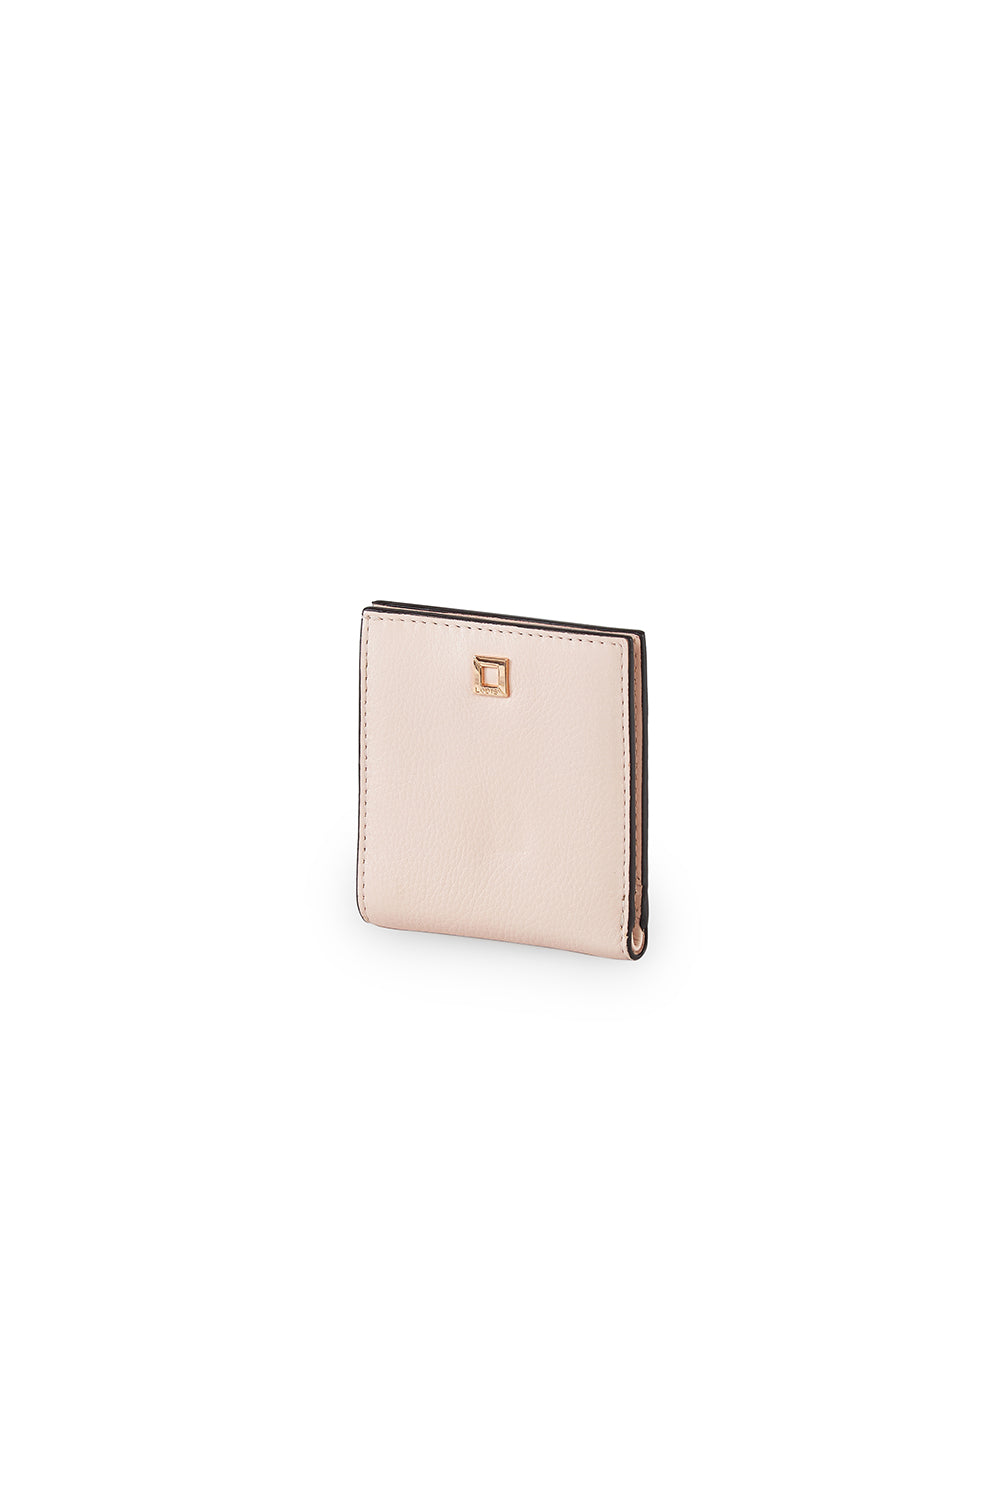 Shop Julia Compact Wallet | Lodis 